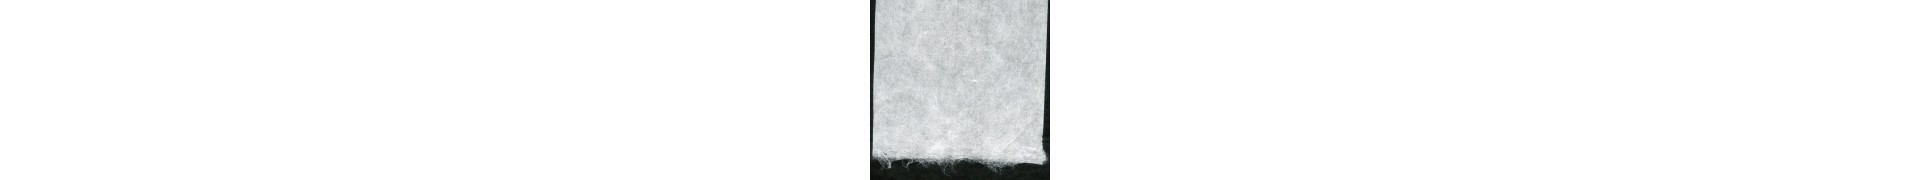 Papier du monde CDQV Coréen n.01 - 20/25g - F:75 x 143 cm - Blanc